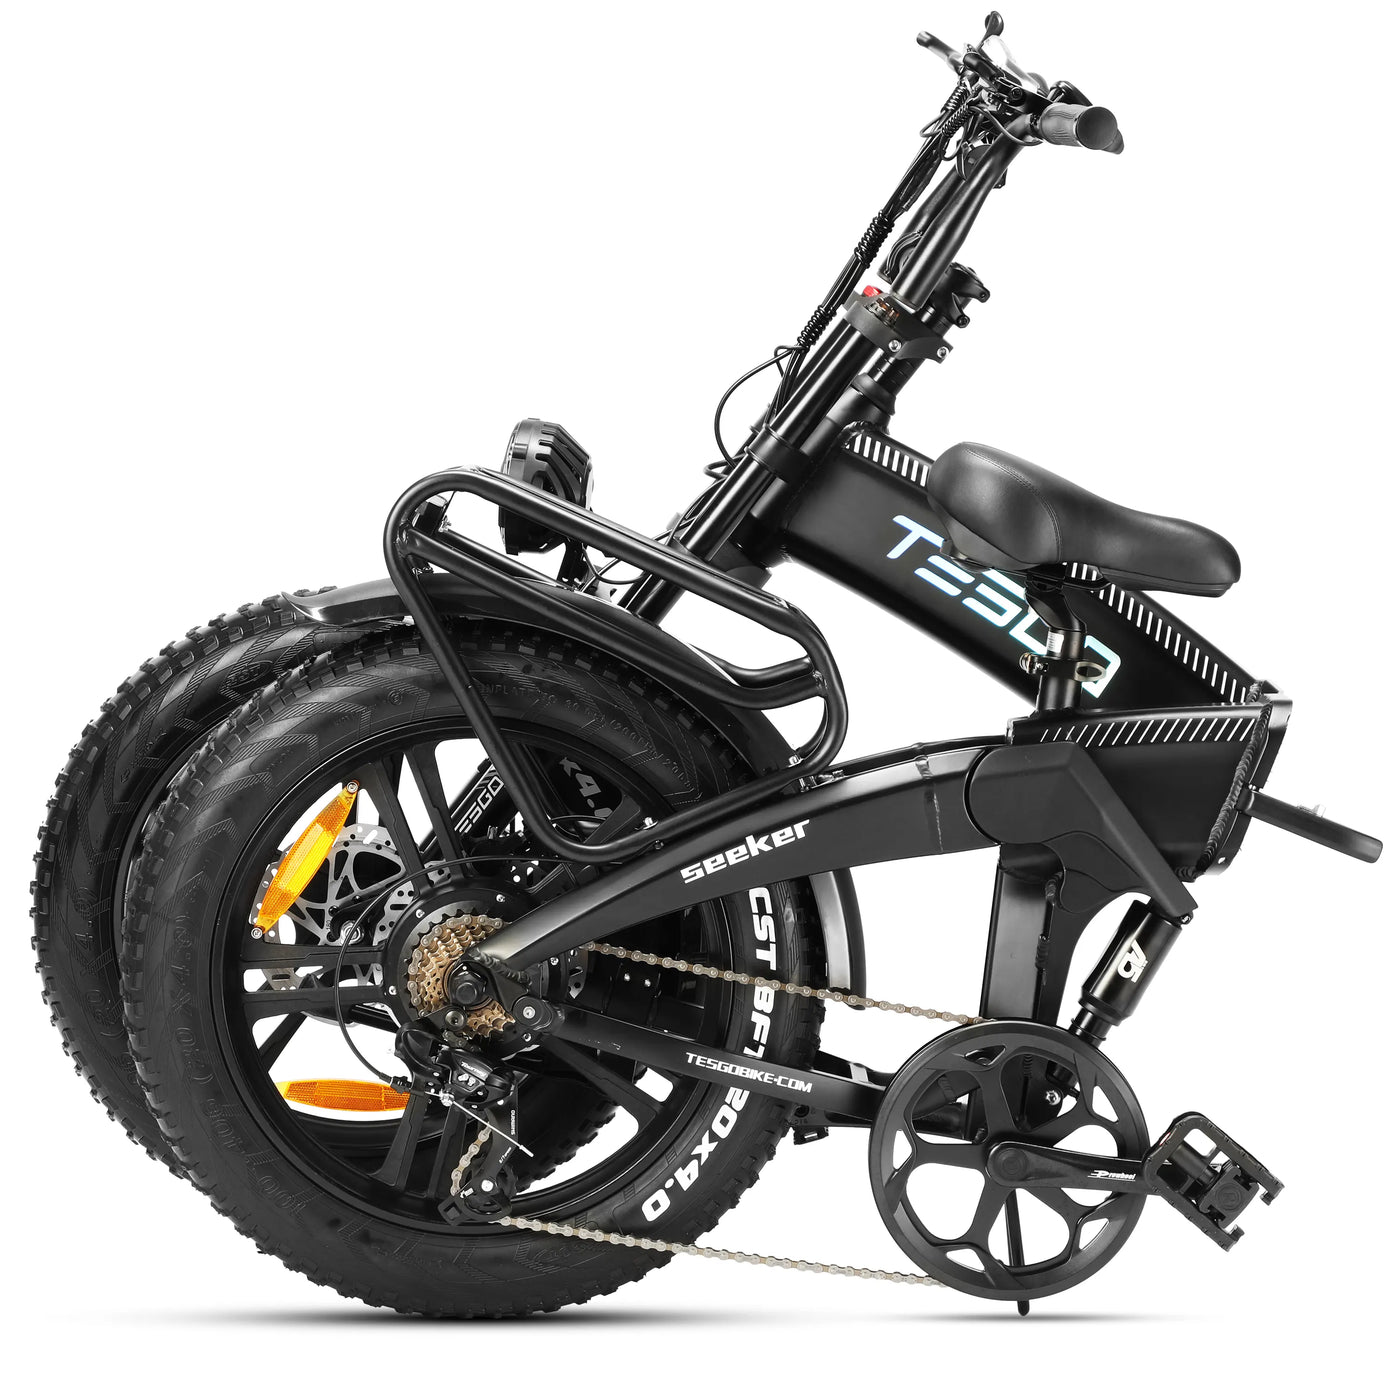 Tesgo seeker All Terrain Professional Fat Tire Electric Bike